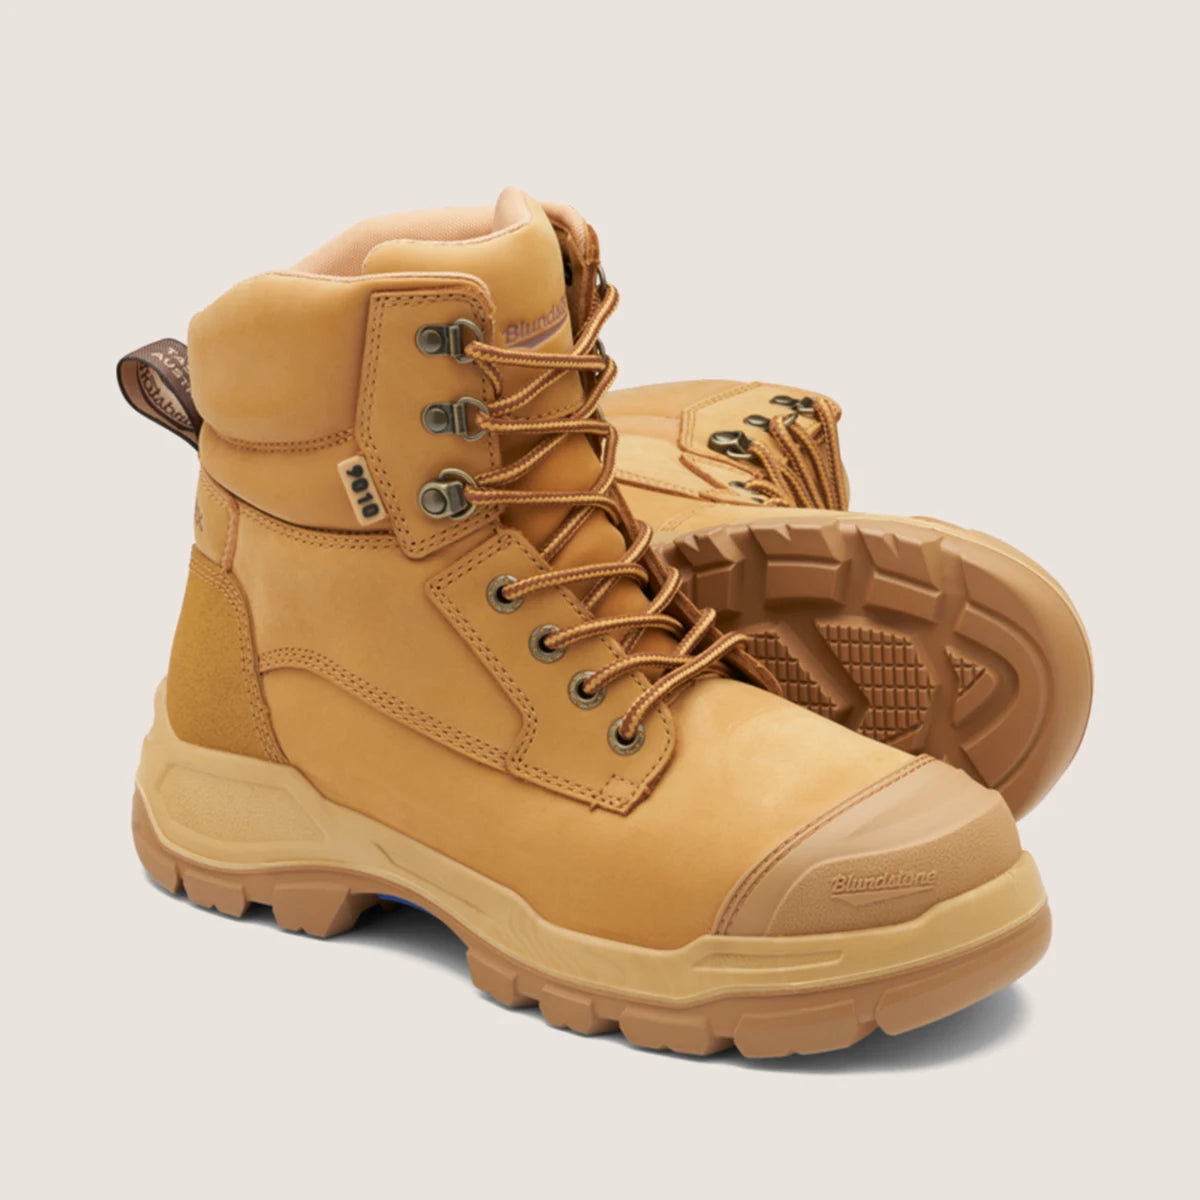 Blundstone 9010 Unisex RotoFlex Safety Boots - Wheat